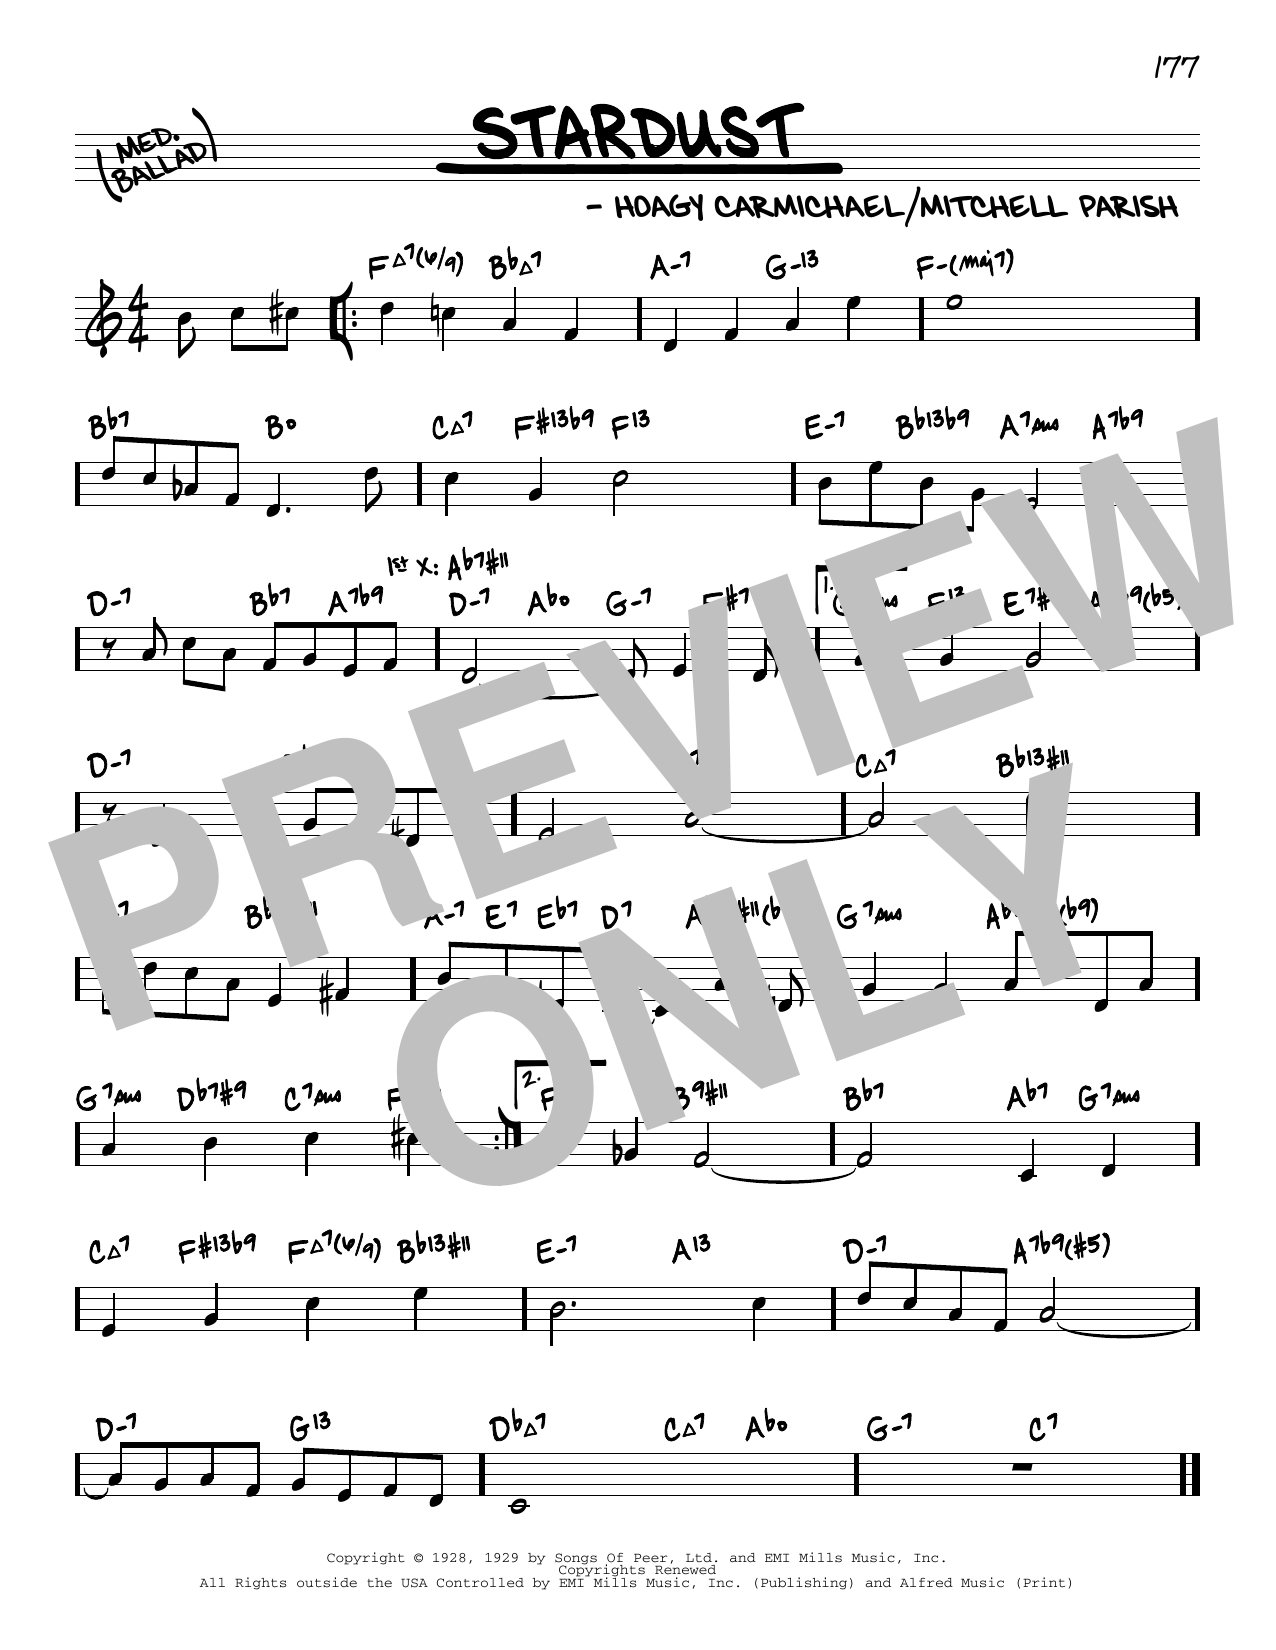 Hoagy Carmichael Stardust (arr. David Hazeltine) Sheet Music Notes & Chords for Real Book – Enhanced Chords - Download or Print PDF